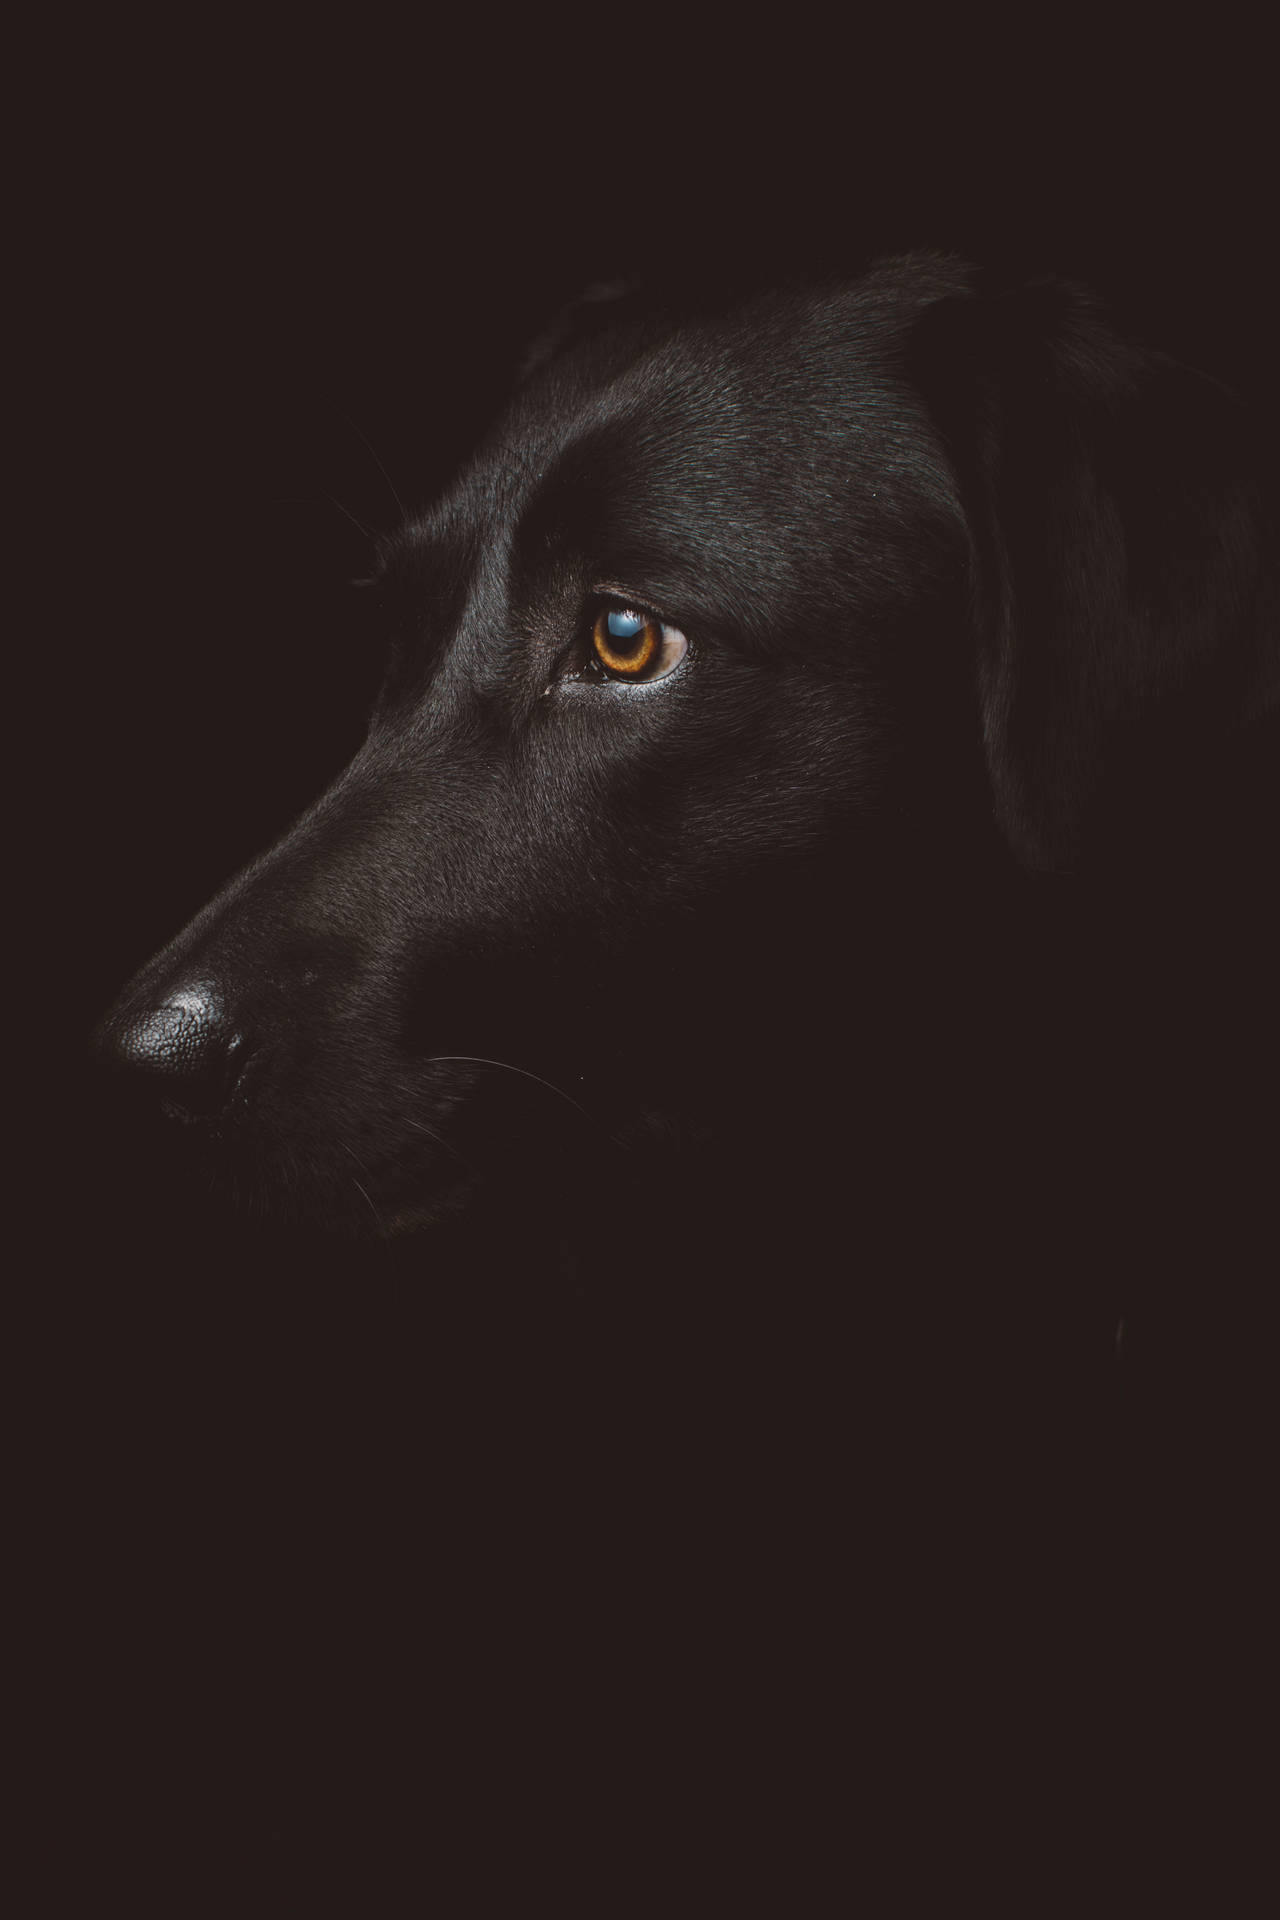 Black dog close-up photography wallpaper.